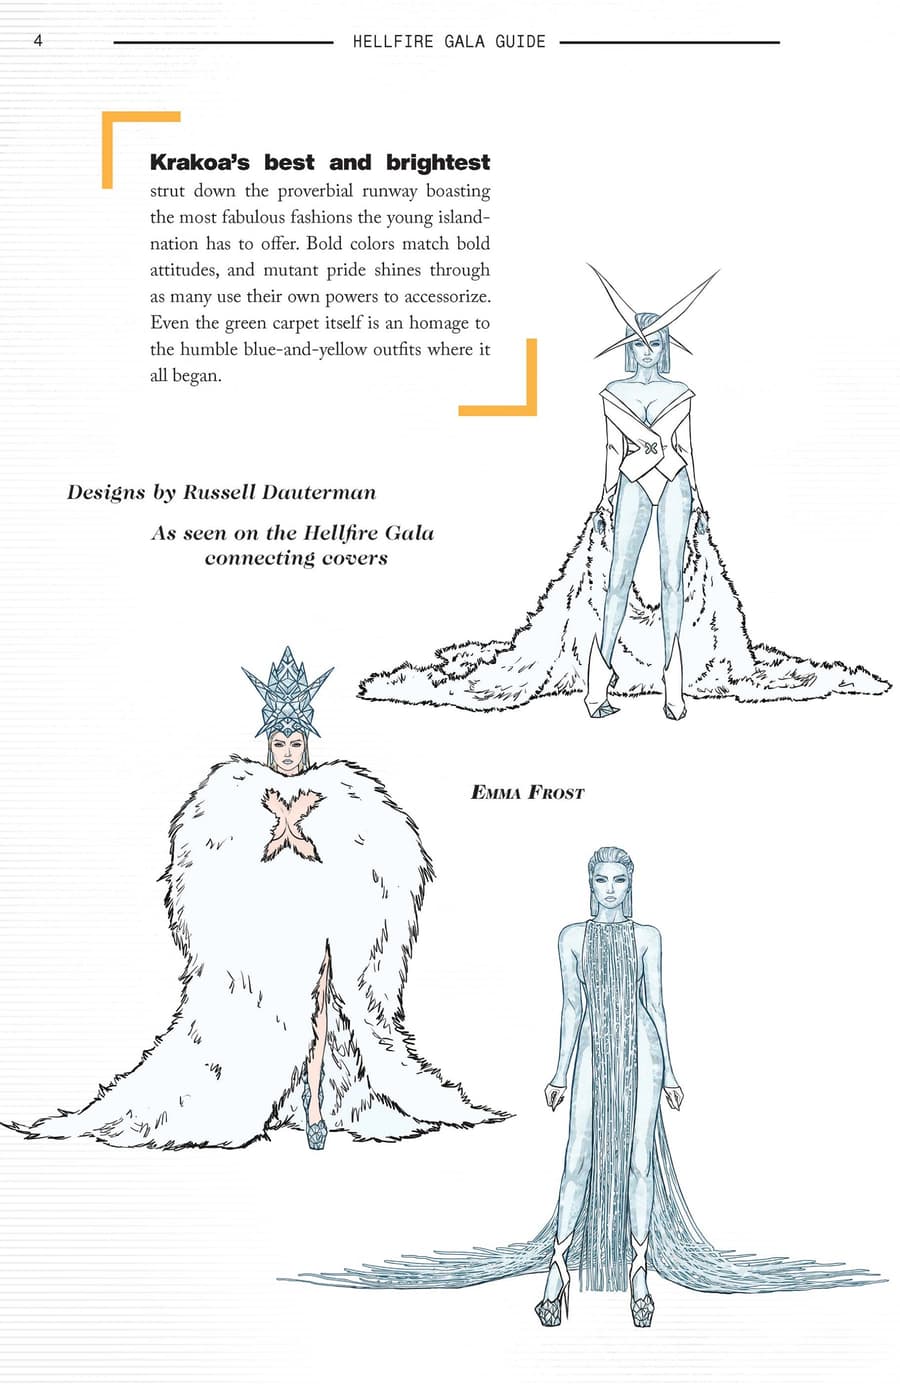 Emma Frost’s designs by Russell Dauterman in HELLFIRE GALA GUIDE (2021) #1.